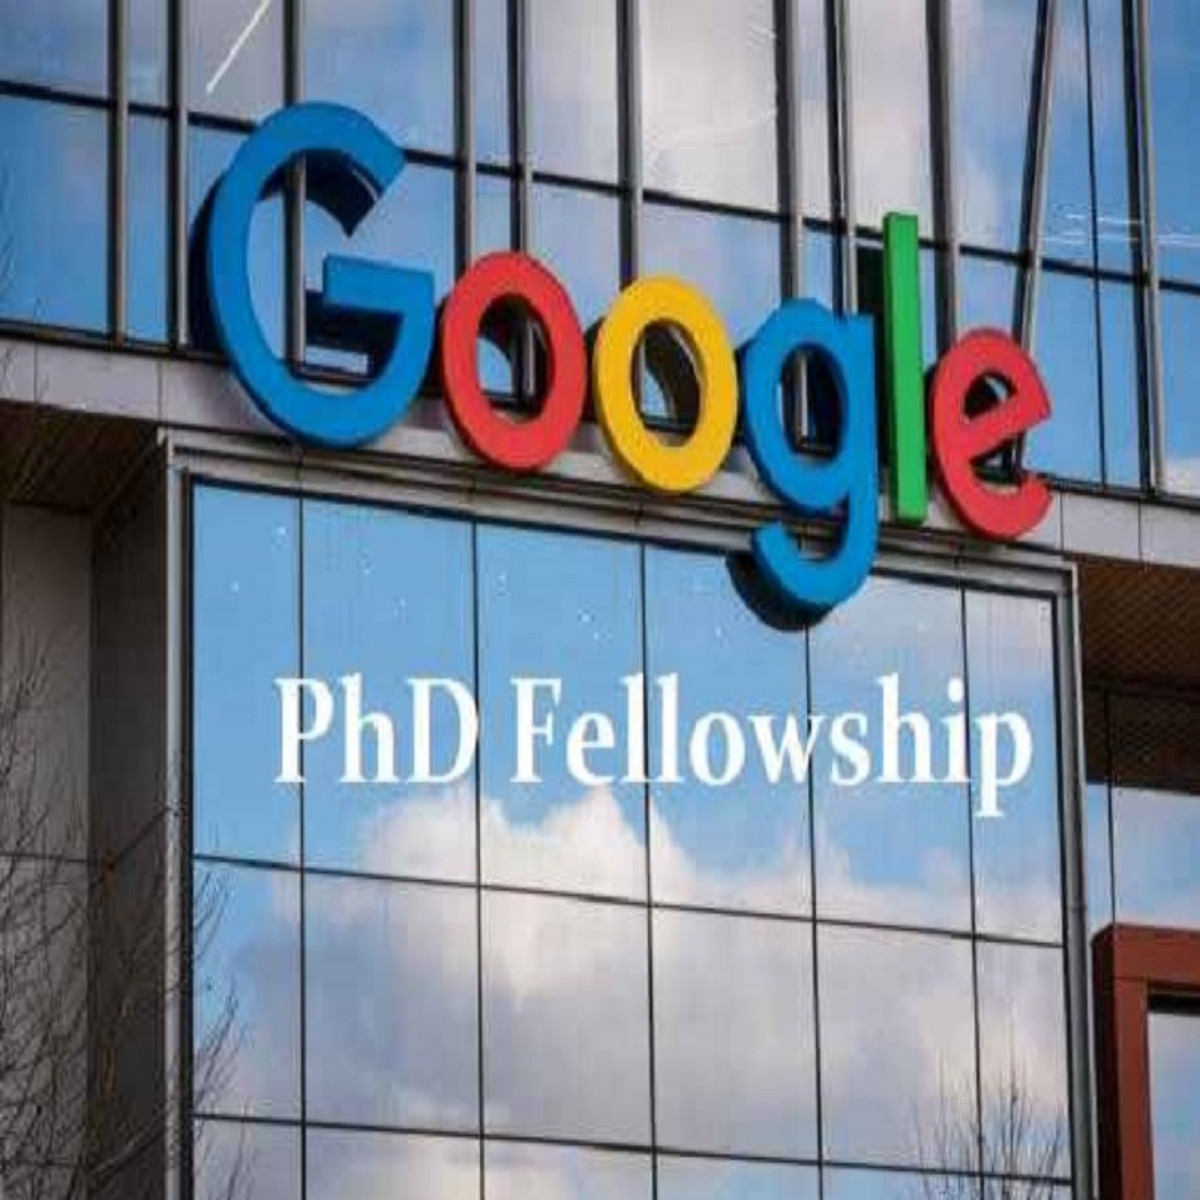 google phd fellowship 2023